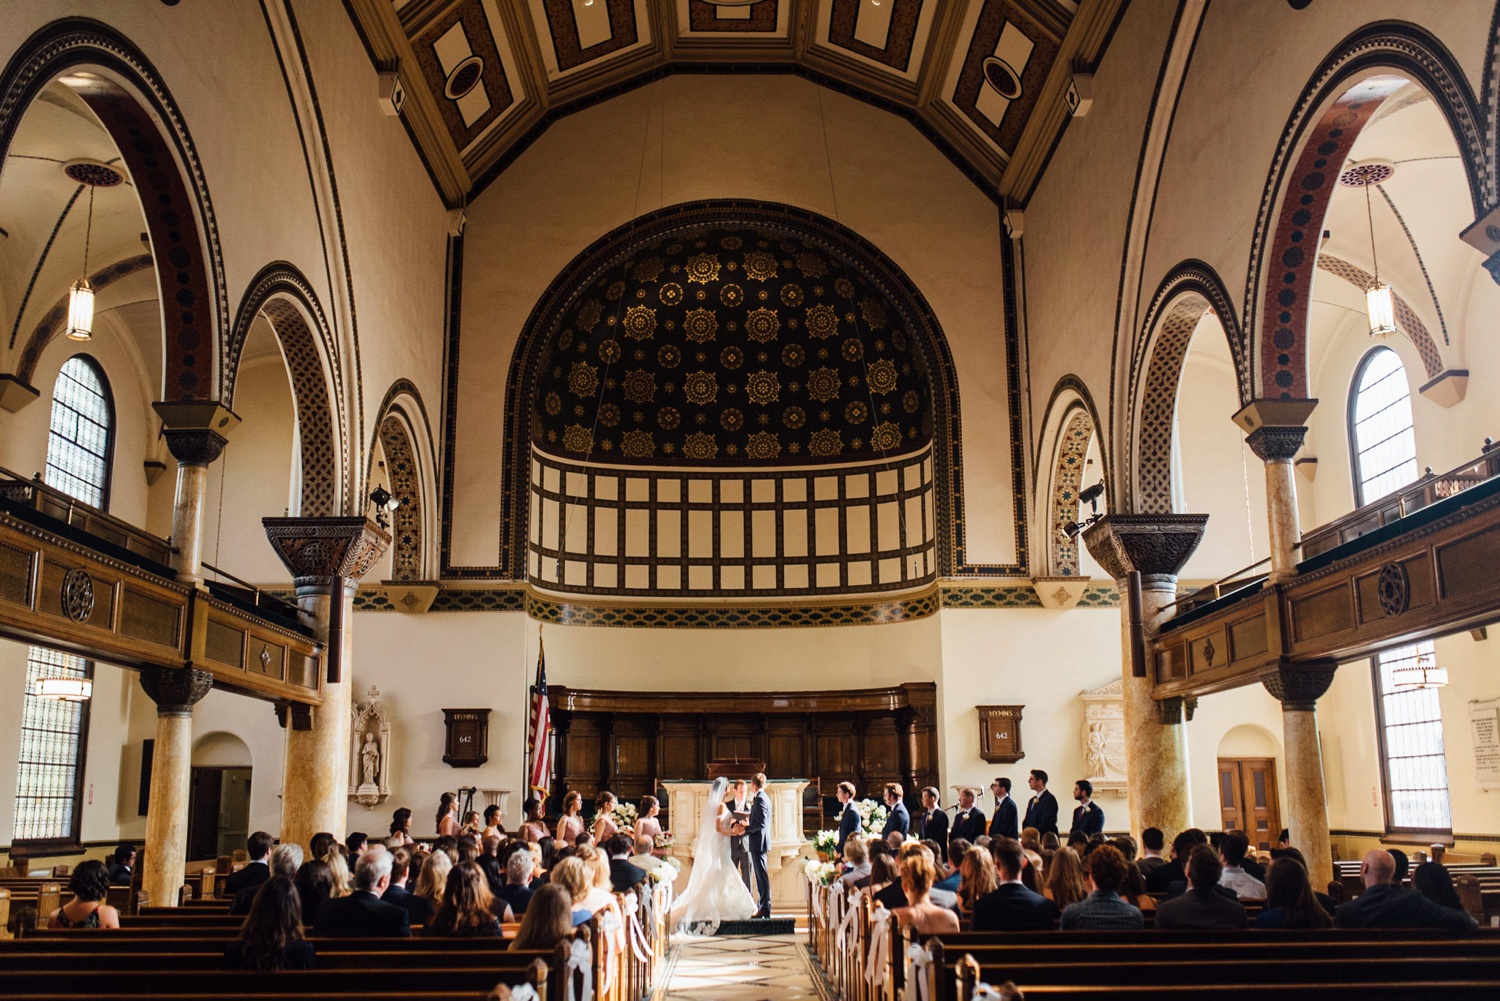 Erica + Chase - Tenth Presbyterian Church Wedding - Philadelphia Wedding Photographer - Alison Dunn Photography photo